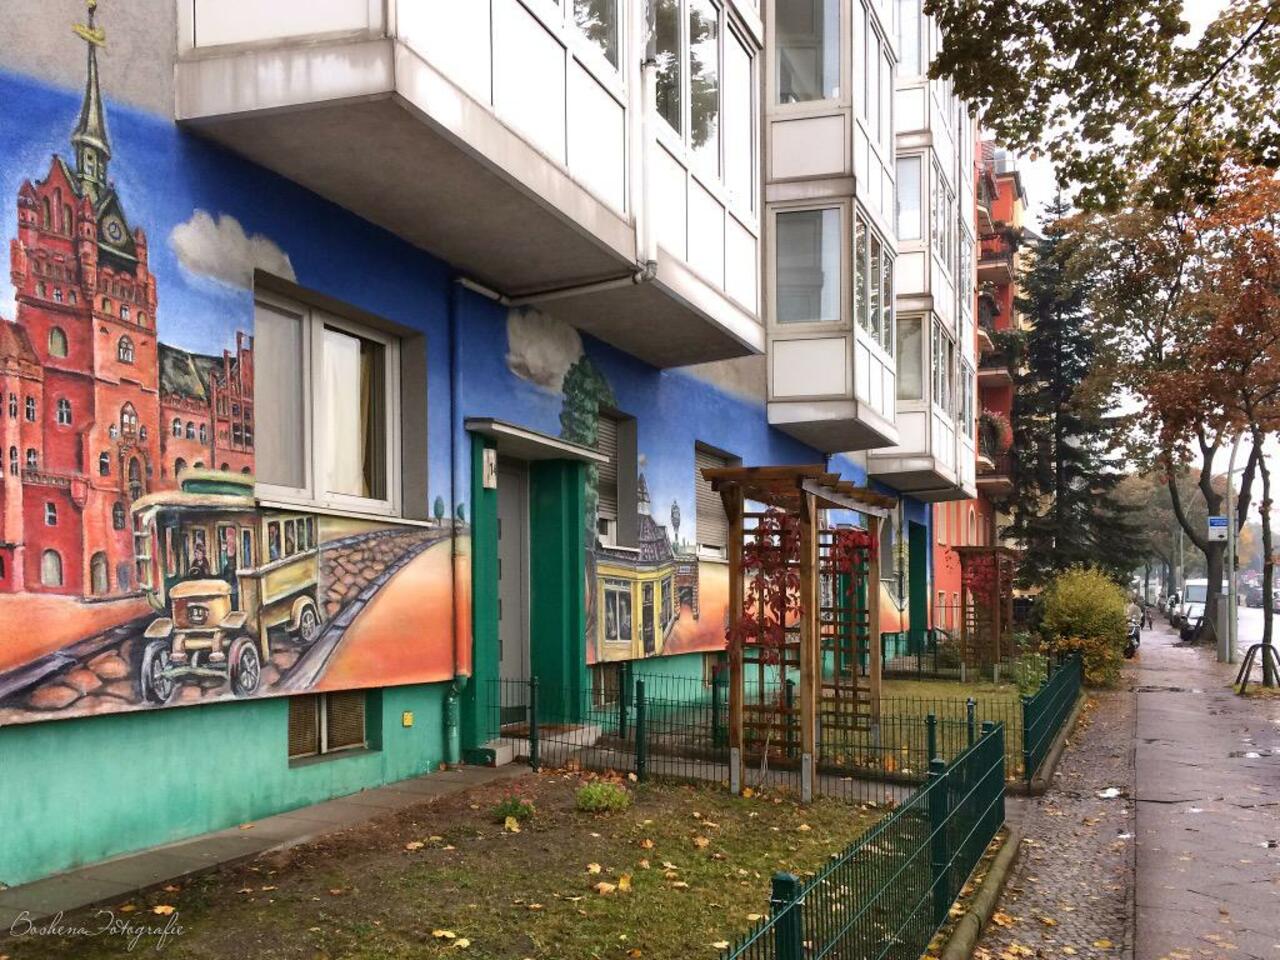 Die Straßen der Hauptstadt
Hier:Wandmalerei in #Berlin #Steglitz
#streetart #Graffiti
@stadtleben @I_love_Berlin http://t.co/cGiFK9anve